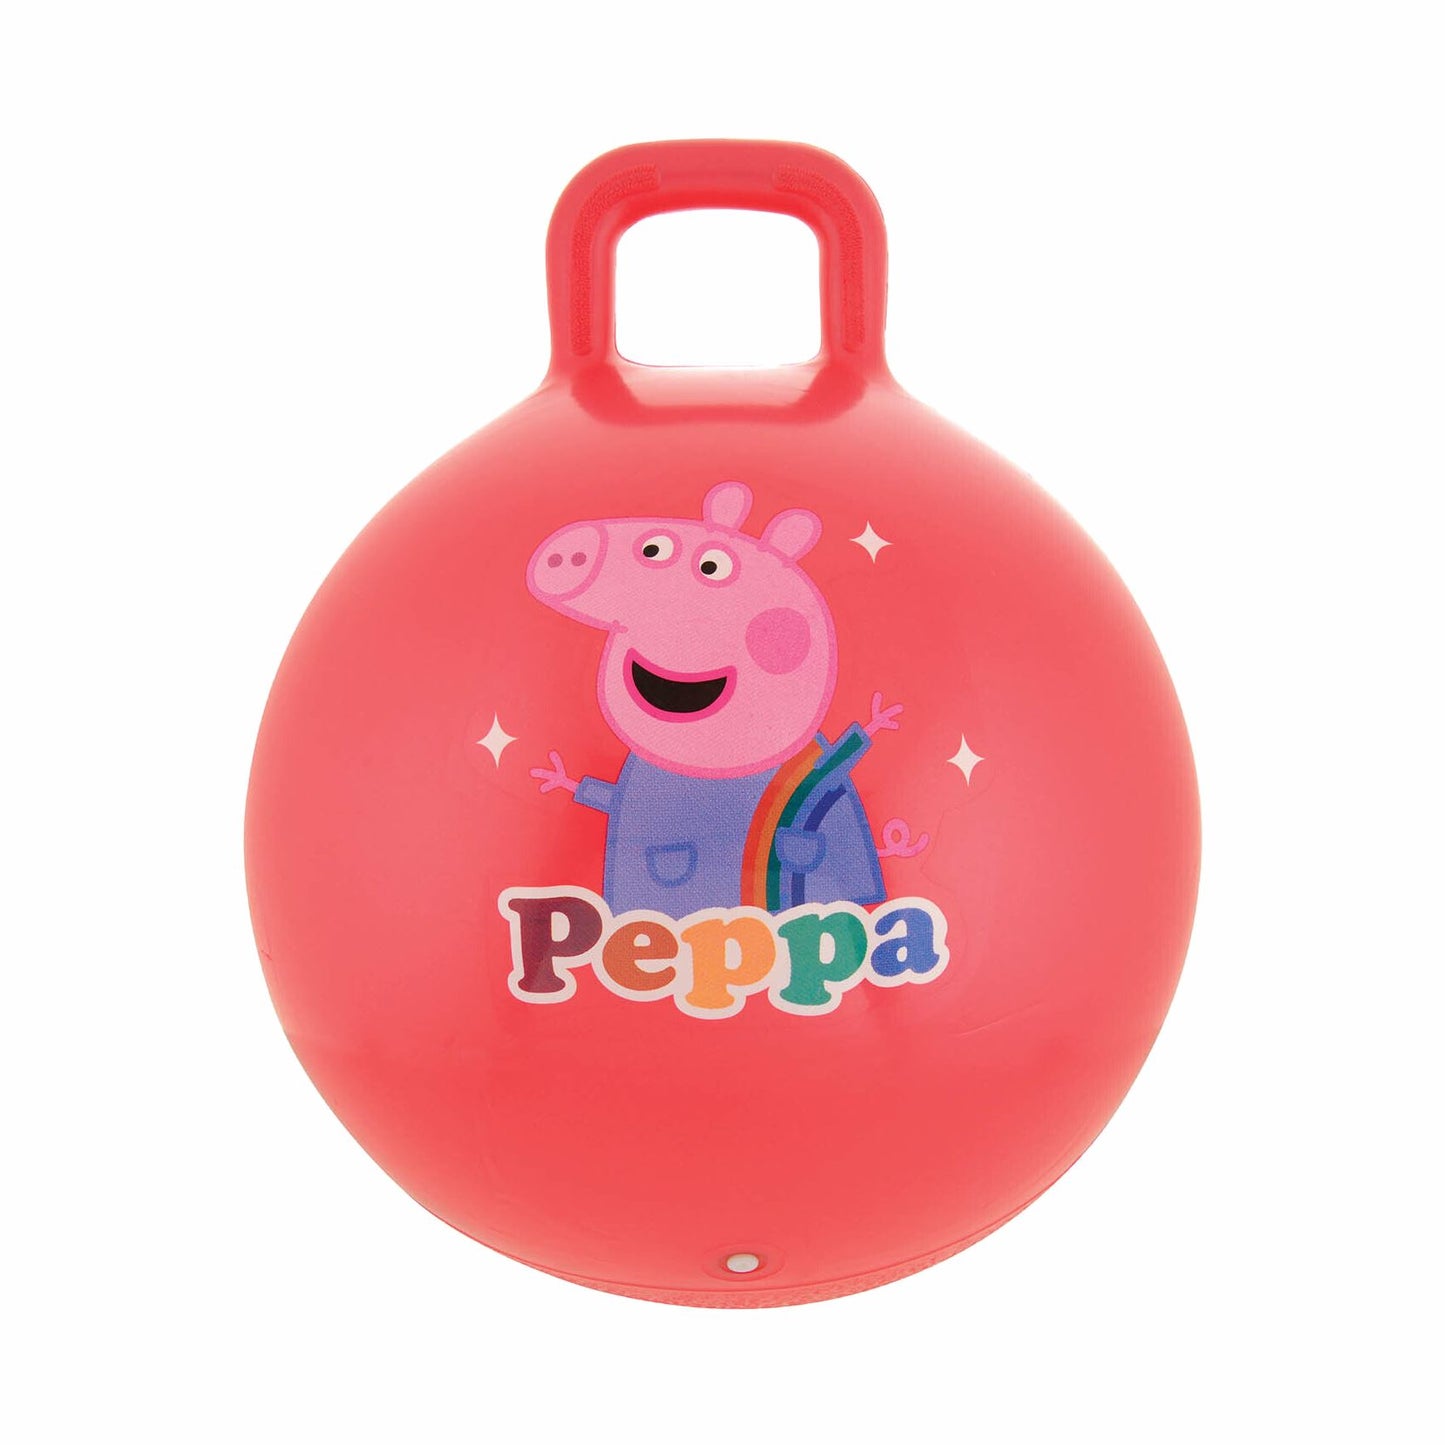 Peppa Pig Inflatable Hopper